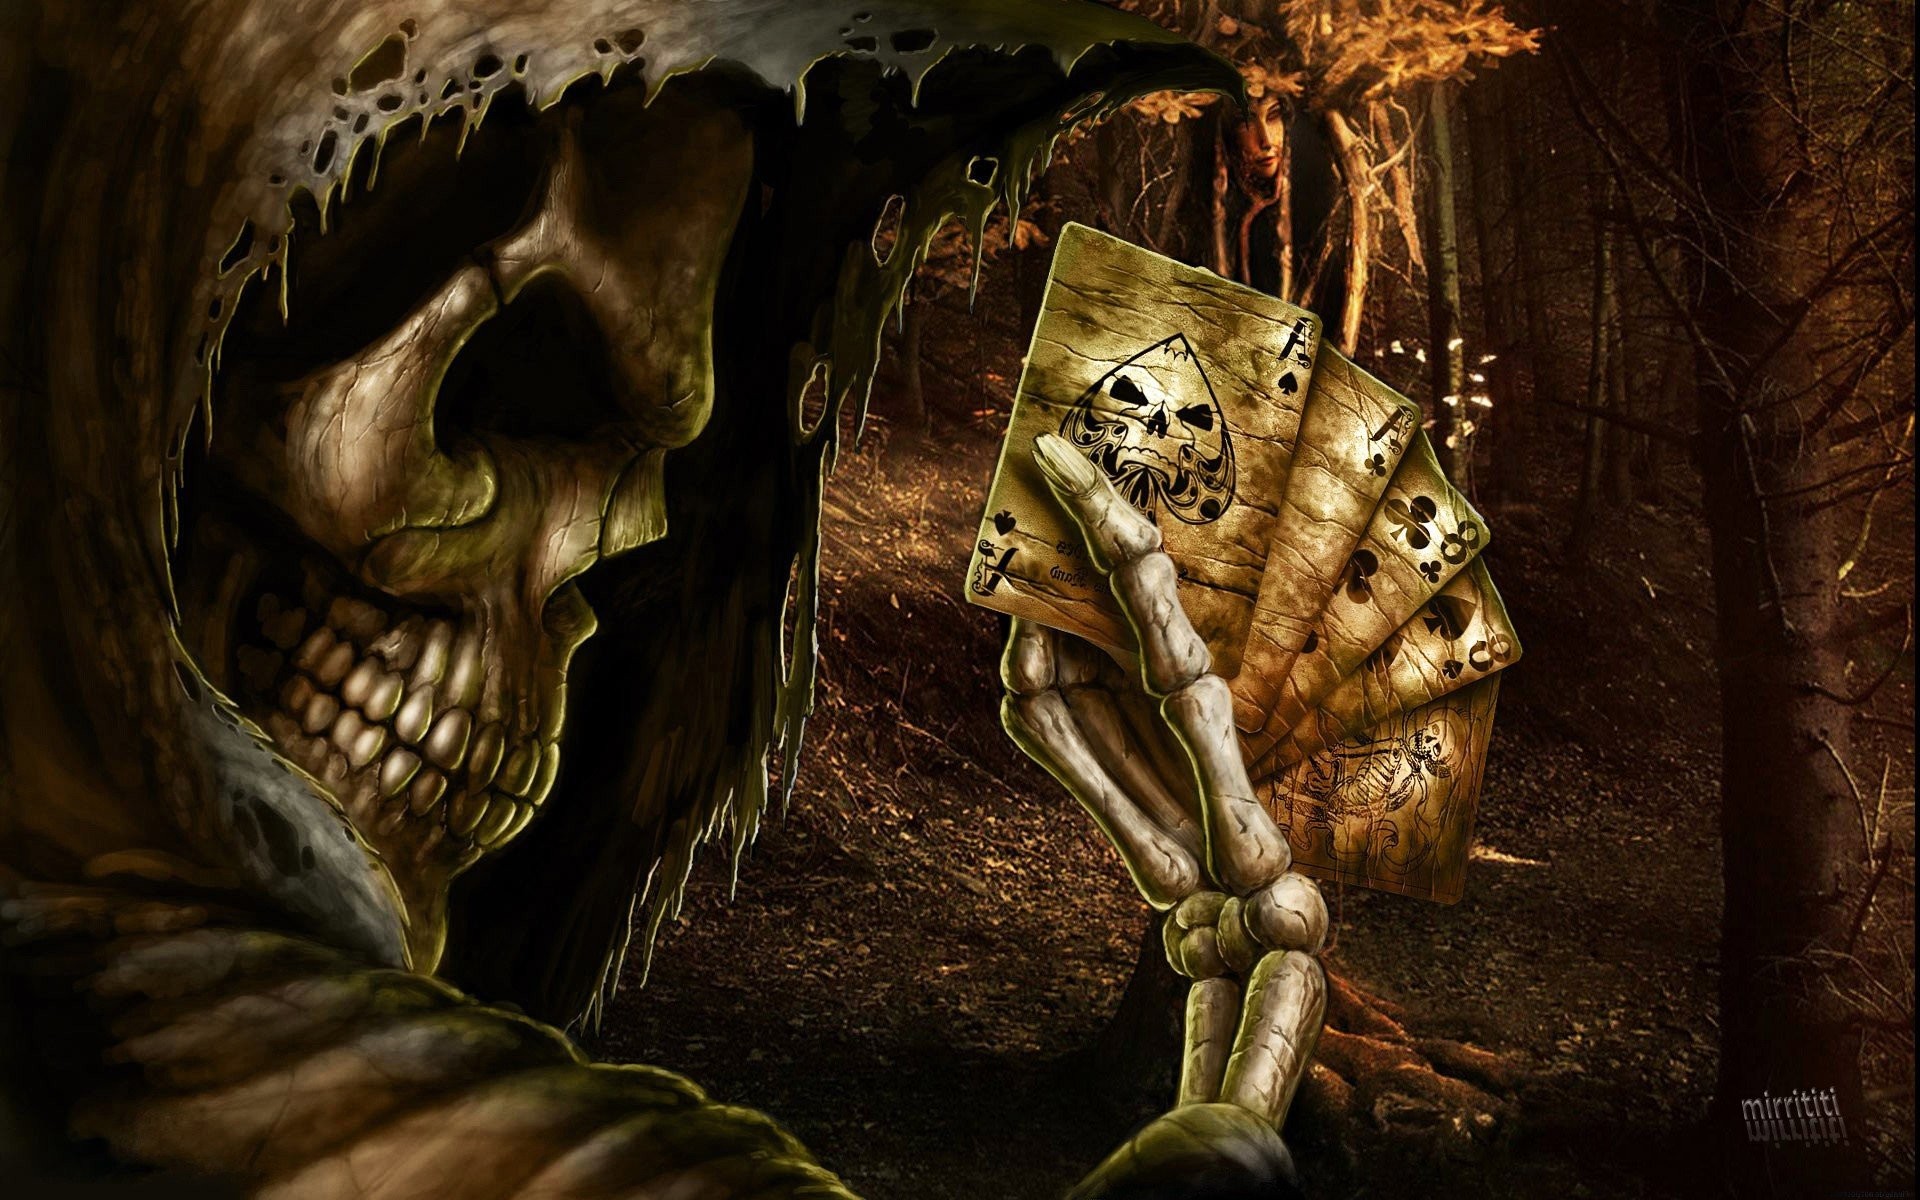 Grim Reaper wallpaper ·① Download free stunning full HD ...